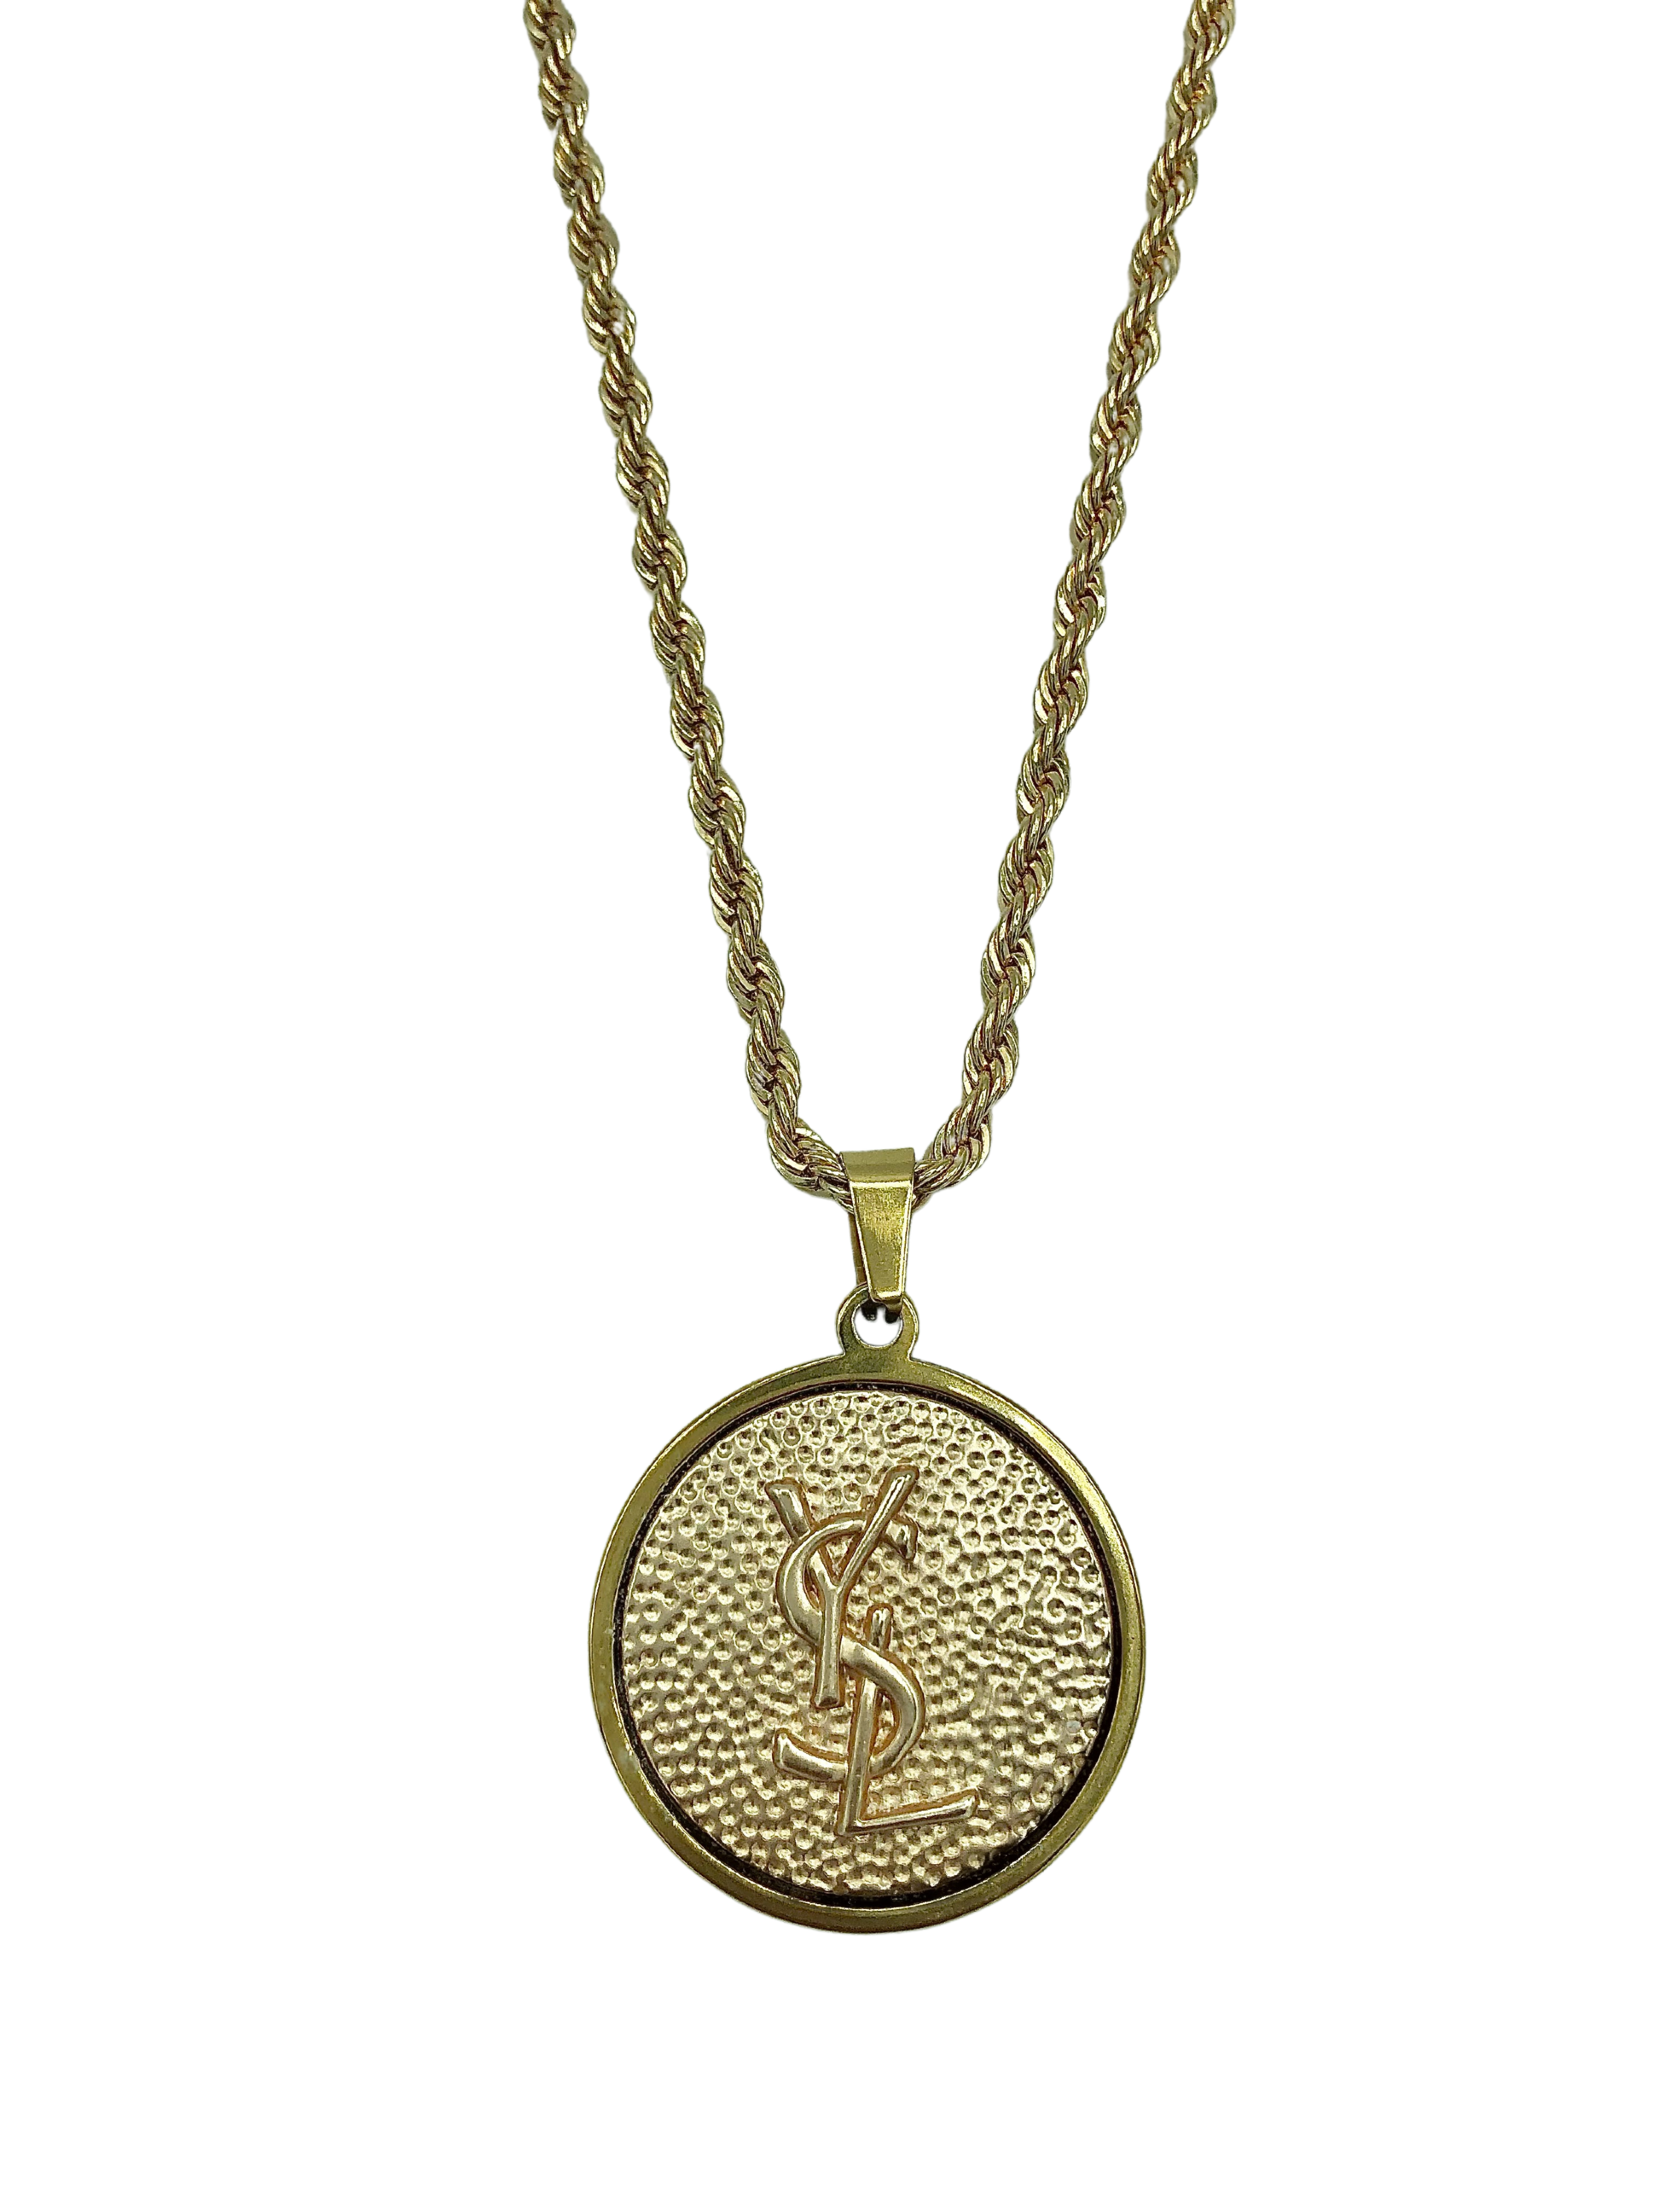 The Thomai Medallion Necklace